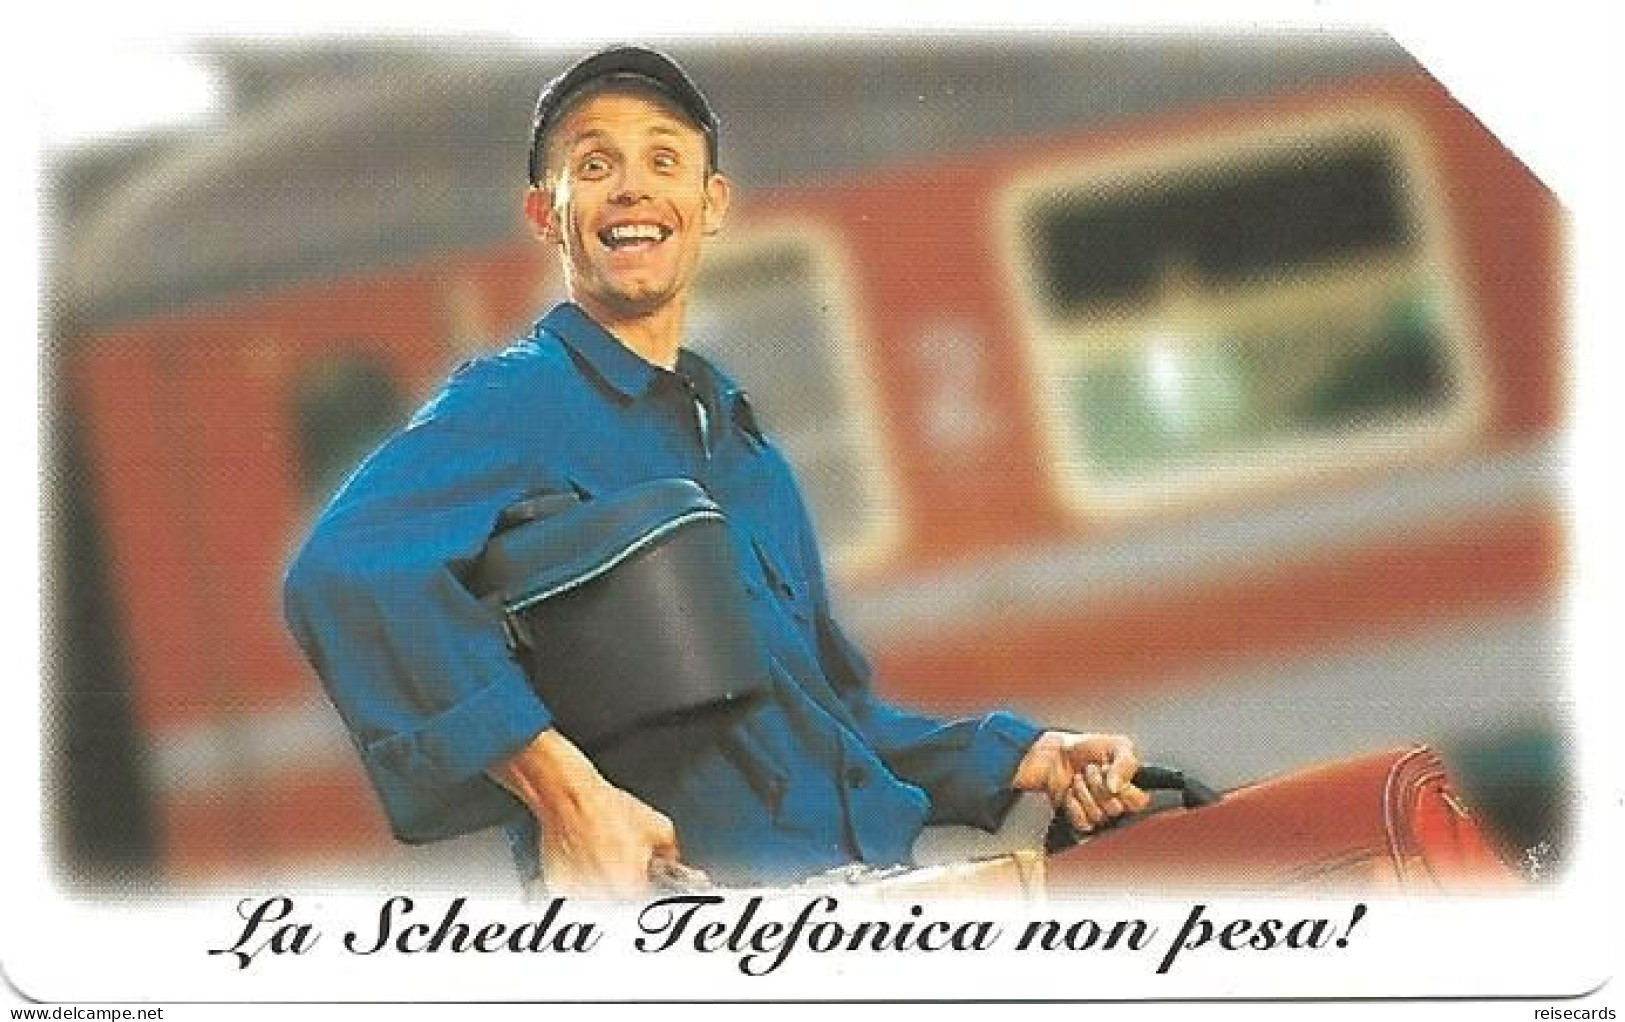 Italy: Telecom Italia - La Scheda Telefonica, Non Pesa! - Publiques Publicitaires